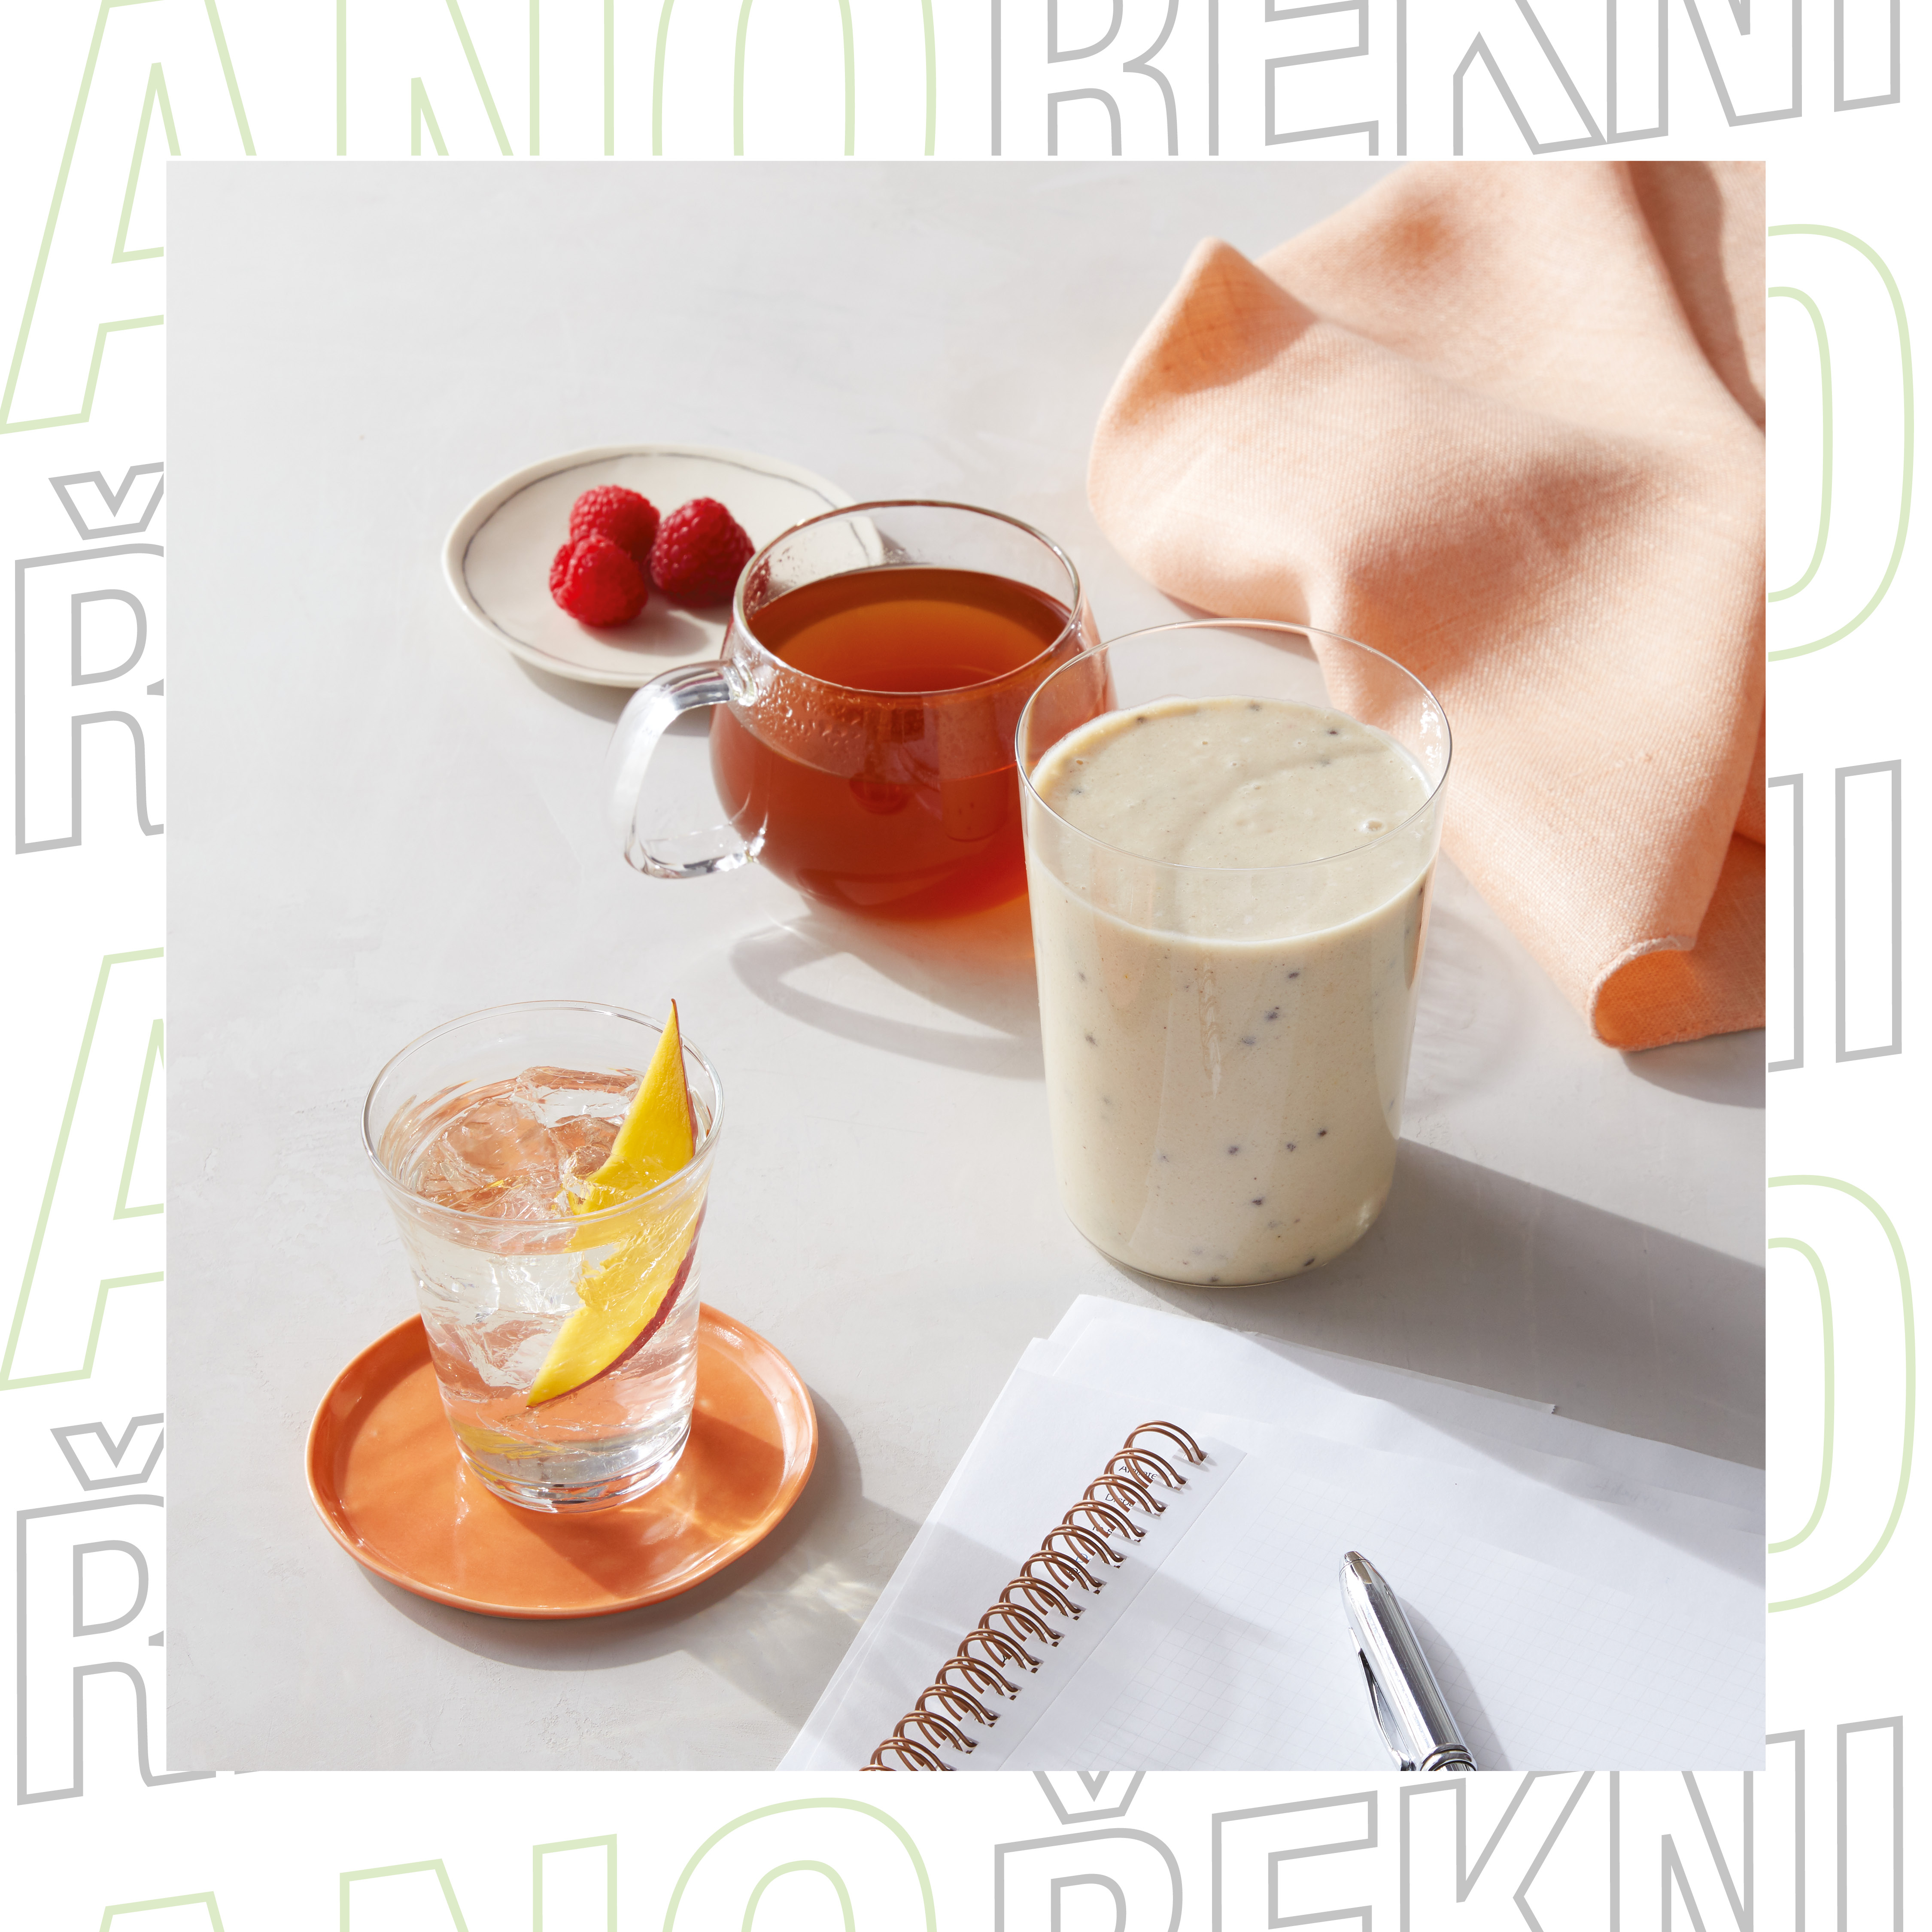 Rekni Aano snadnému zdravému jídlu - oceneným produktum Herbalife Nutrition